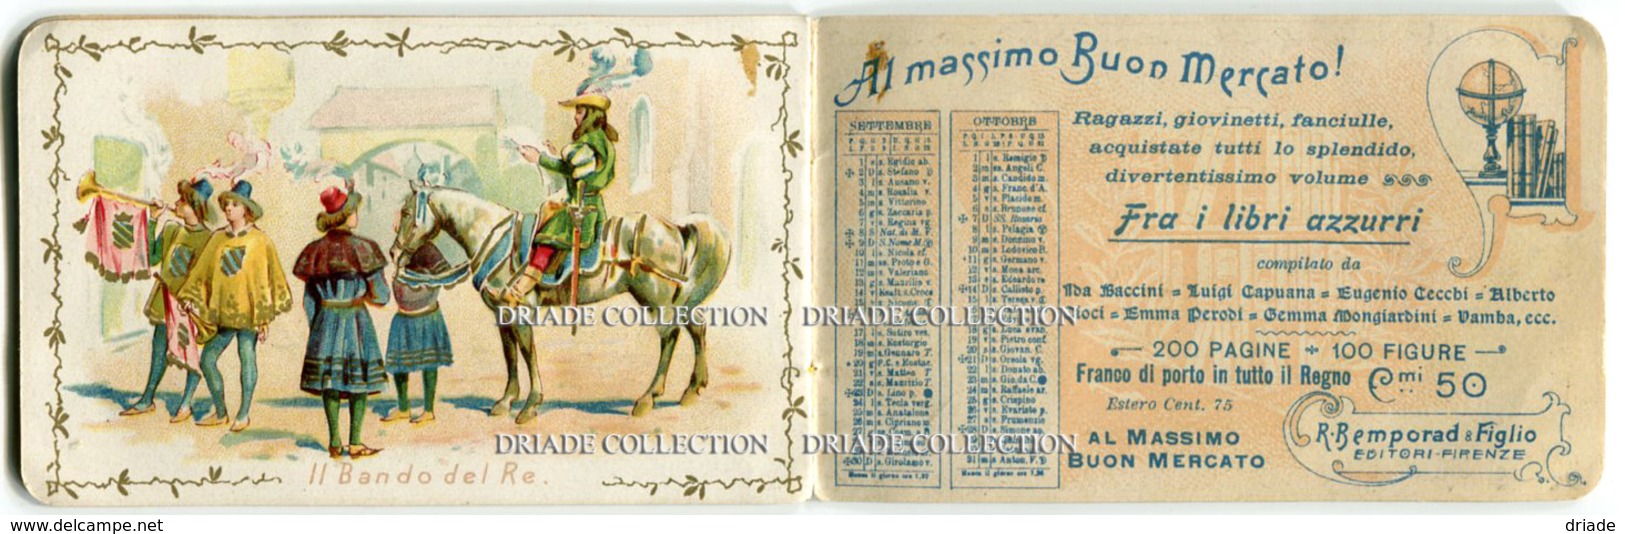 CALENDARIETTO ALMANACCO PROFUMATO CENERENTOLA EDITORE R. BEMPORAD ANNO 1900 CALENDRIER PARFUMEE WALT DISNEY